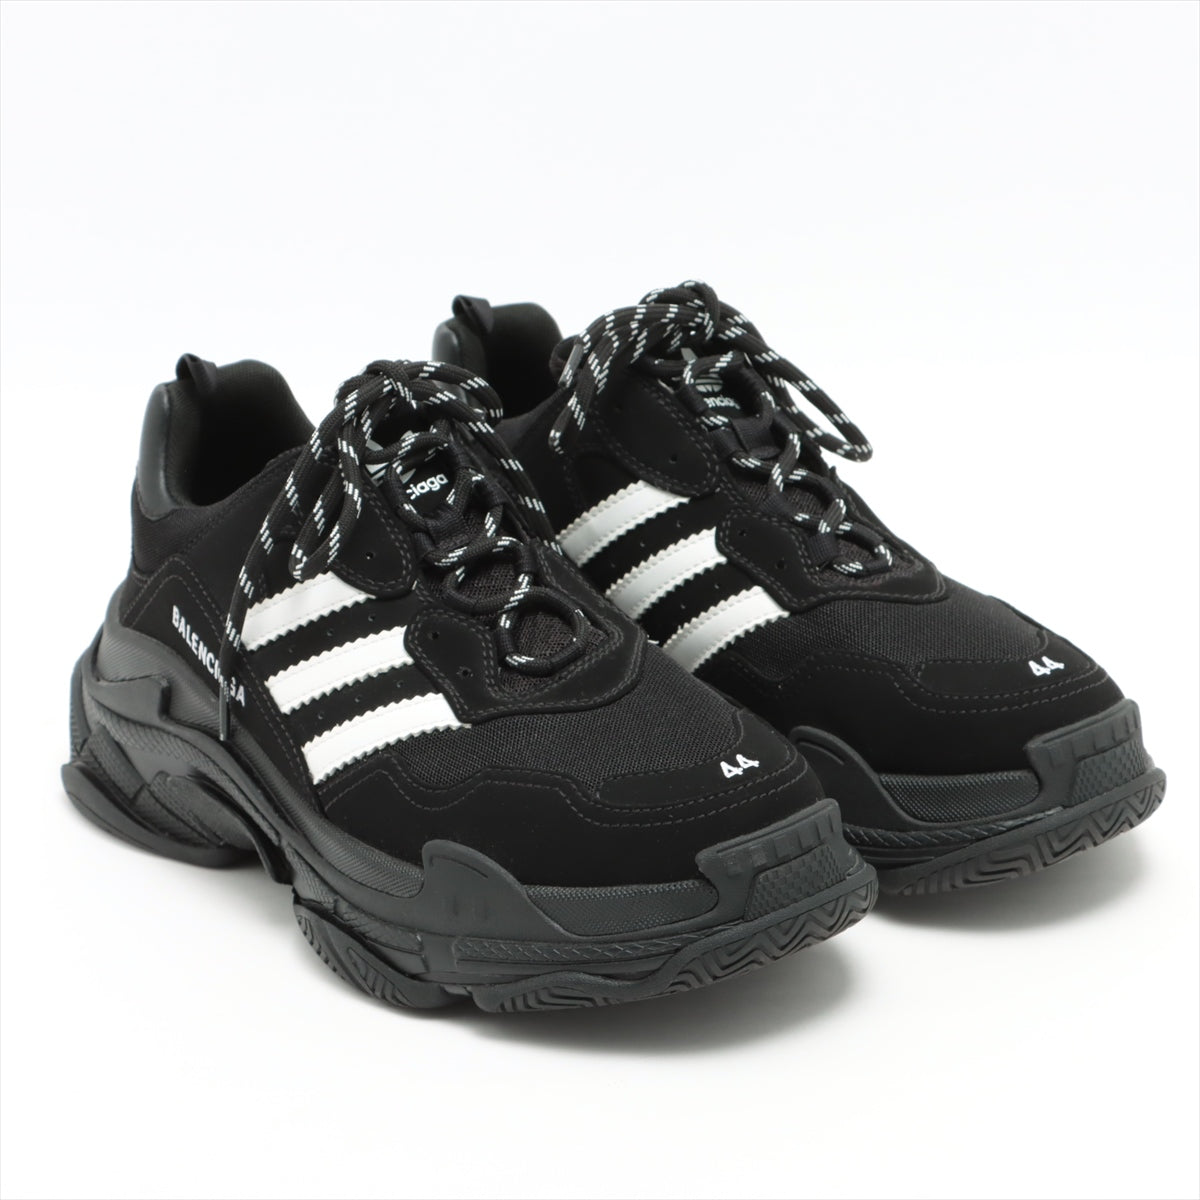 Balenciaga x adidas Triple s 23SS Mesh x leather Sneakers 29㎝ Men's Black × White 712821 box There is a bag